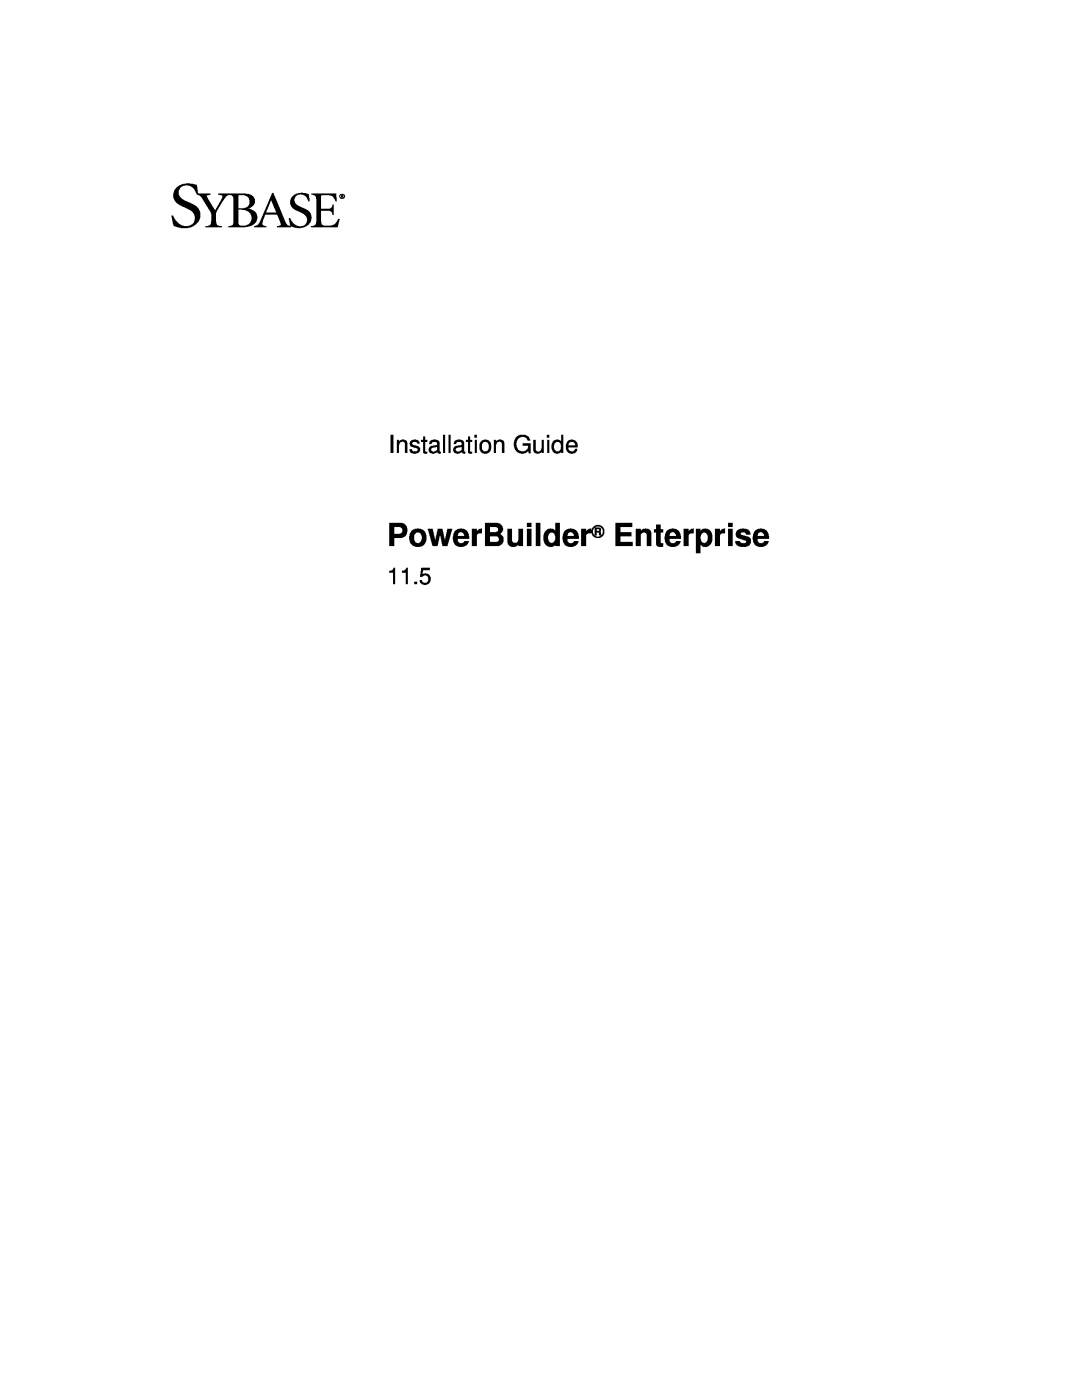 Sybase 6131765115041SS manual PowerBuilder Enterprise, Installation Guide, 11.5 